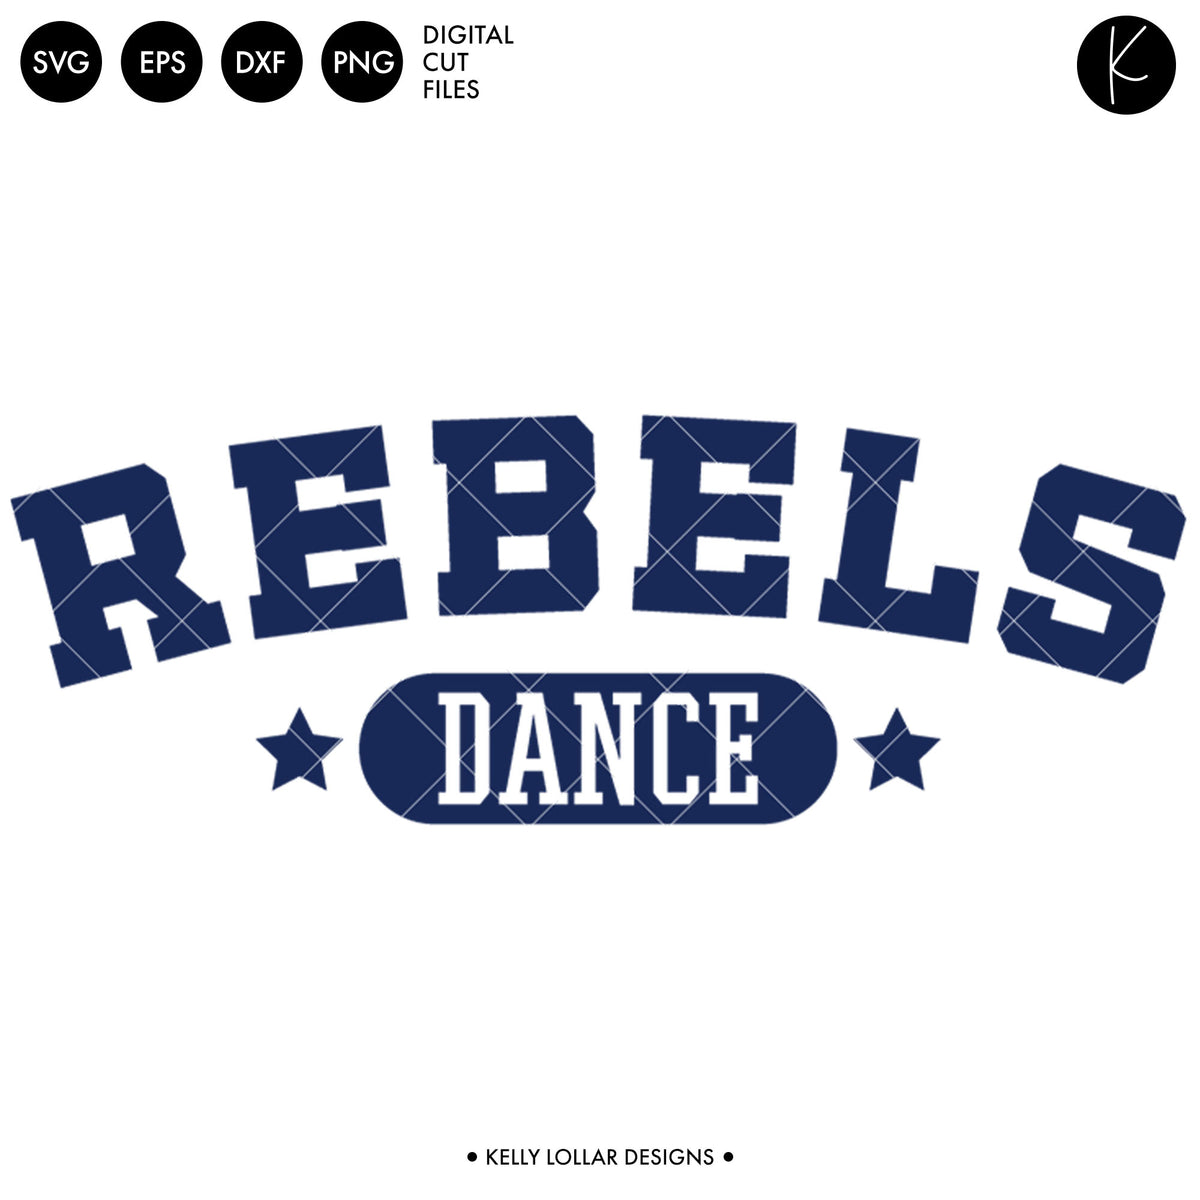 Rebels Dance Bundle | SVG DXF EPS PNG Cut Files